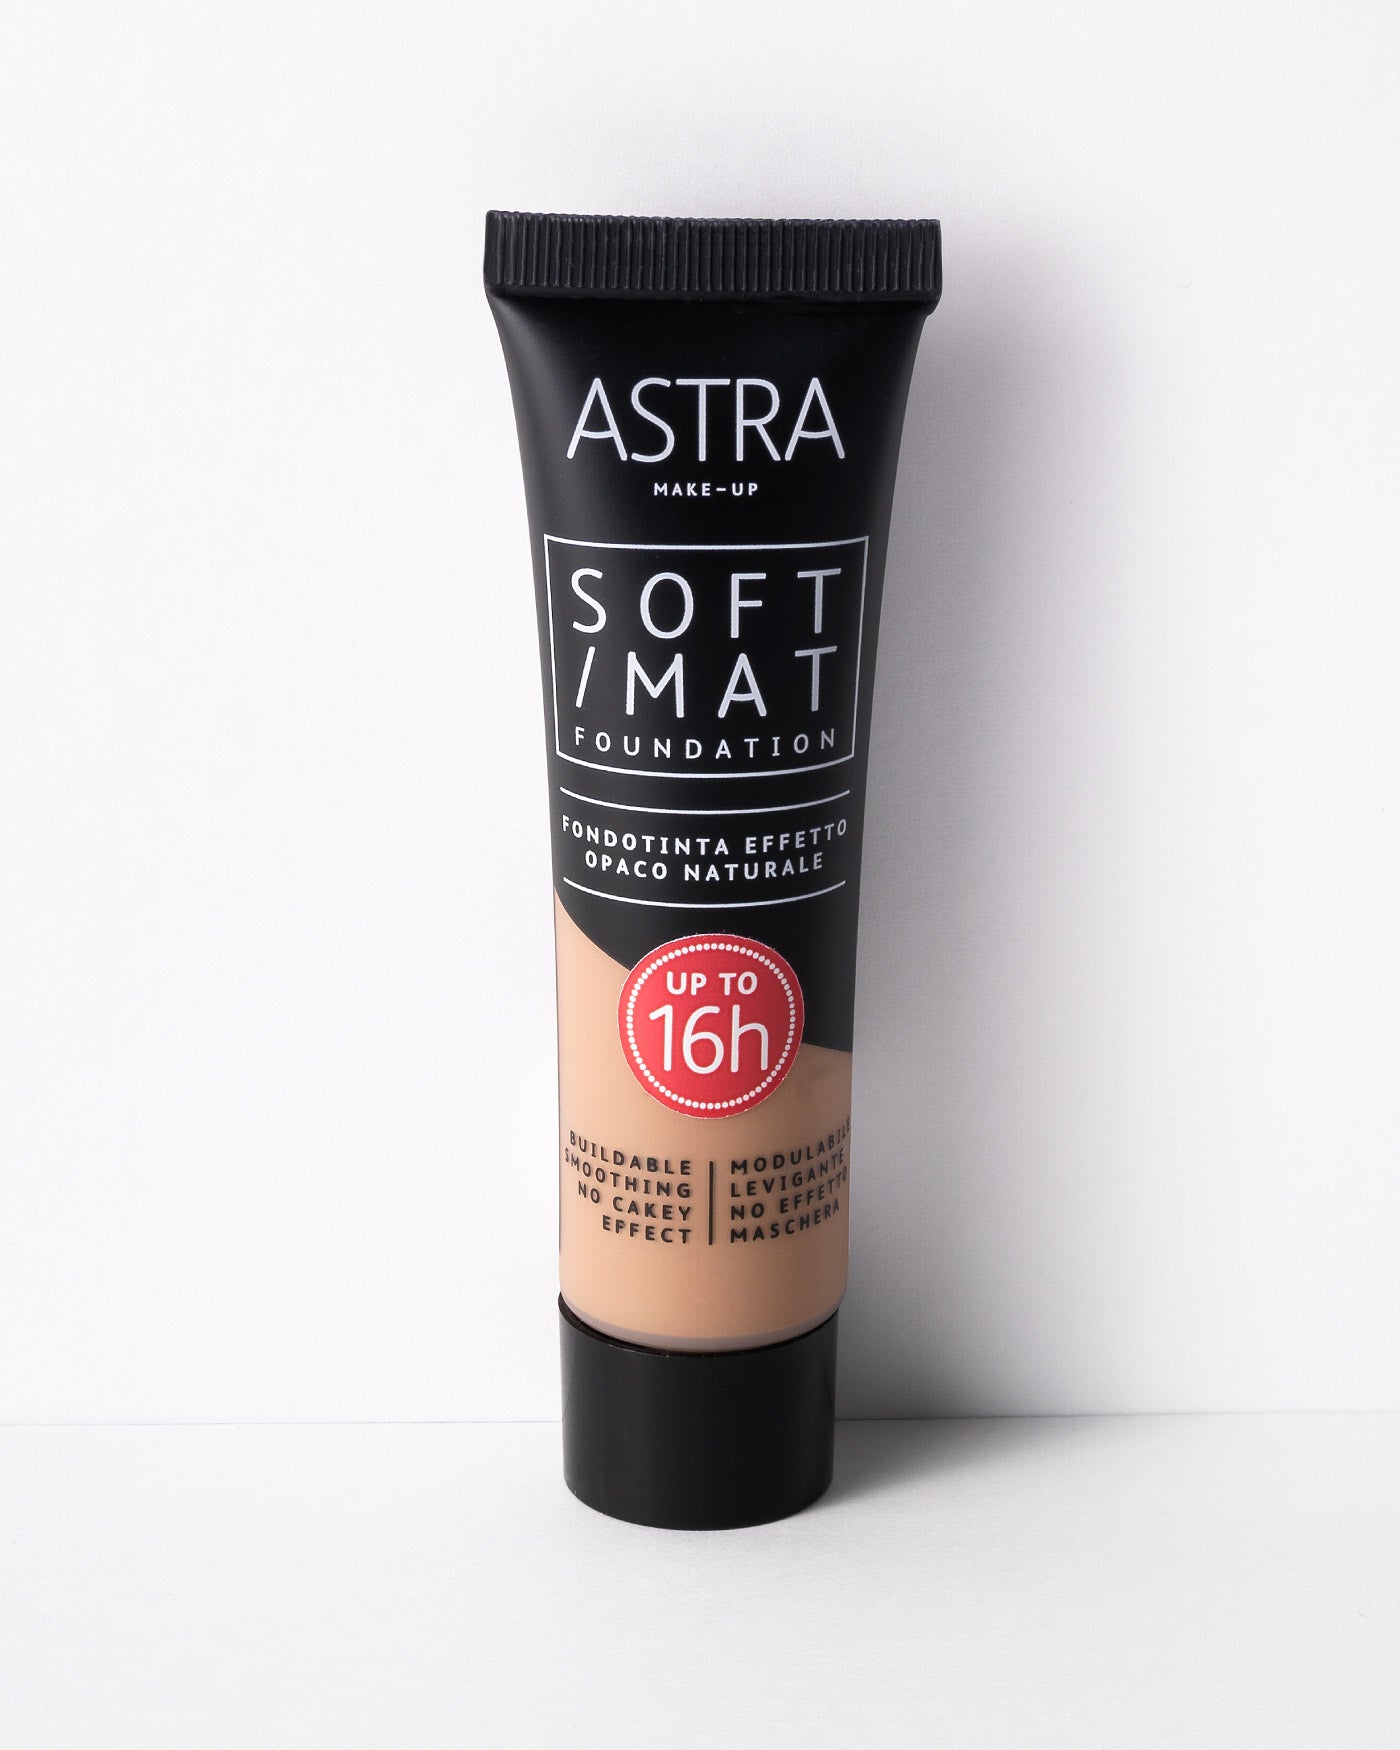 SOFT MAT FOUNDATION - Fondotinta Effetto Opaco Naturale - 06 - Hazelnut - Astra Make-Up